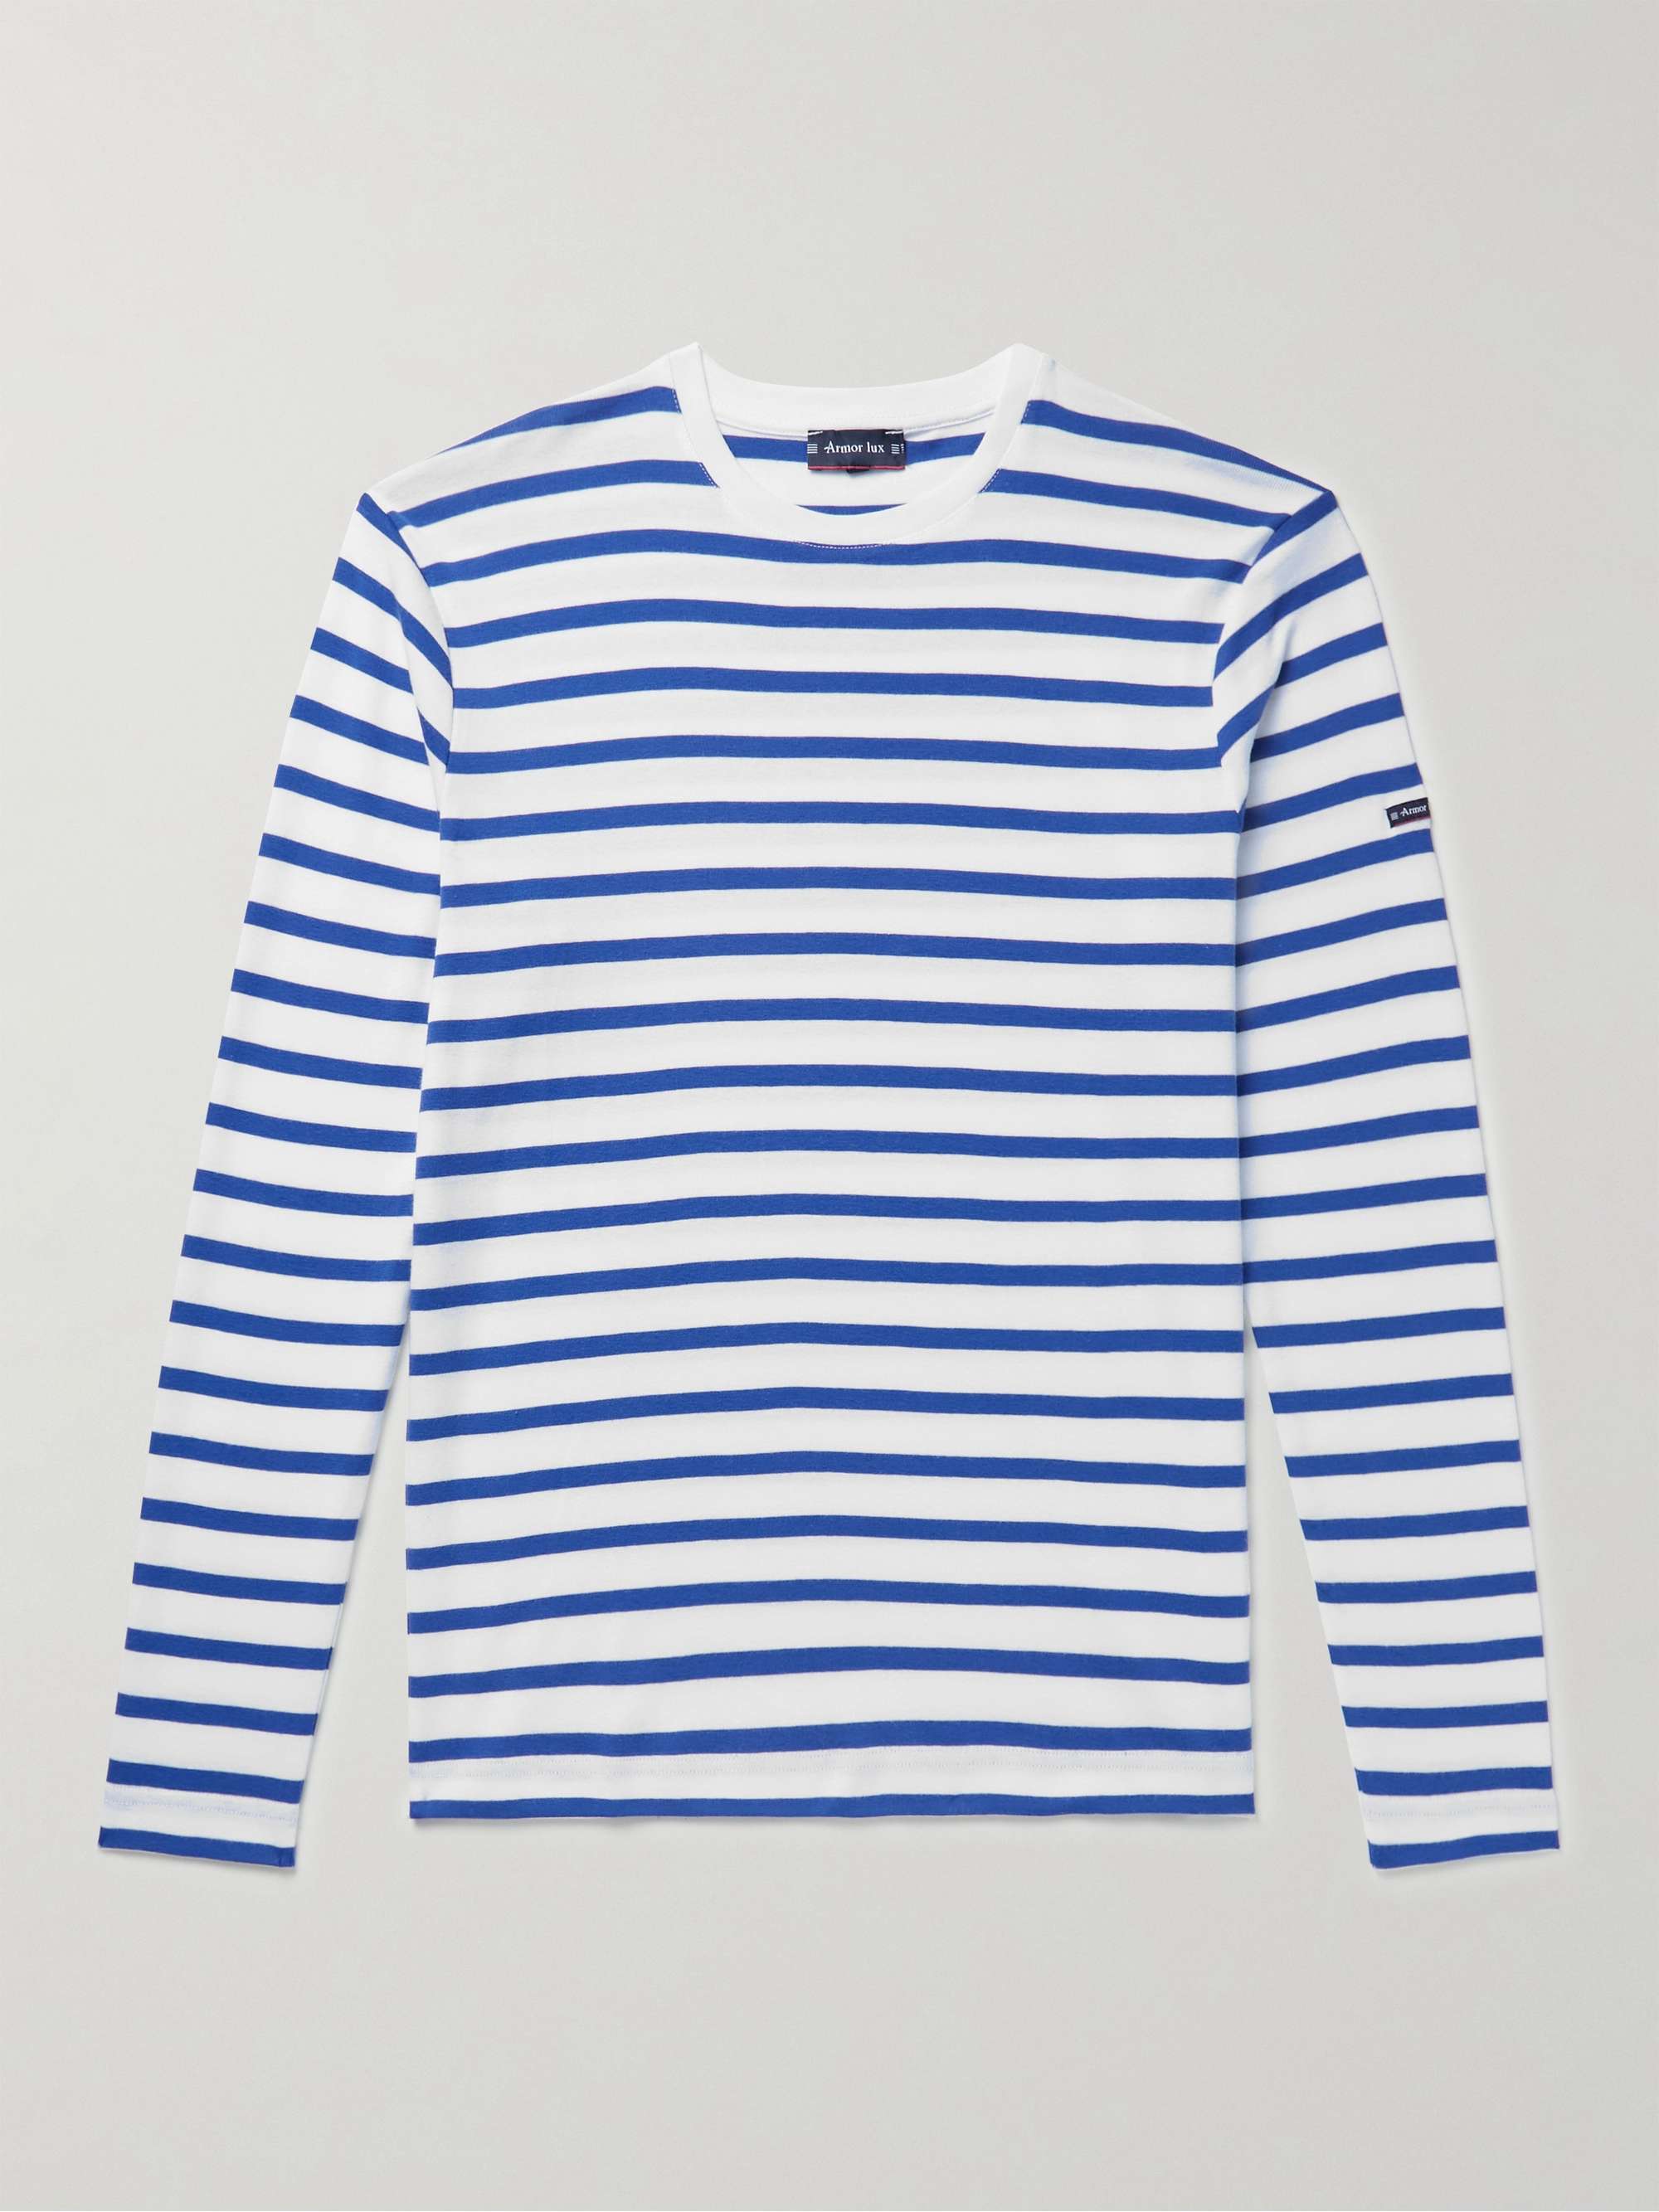 ARMOR-LUX Slim-Fit Striped Cotton-Jersey T-Shirt | MR PORTER